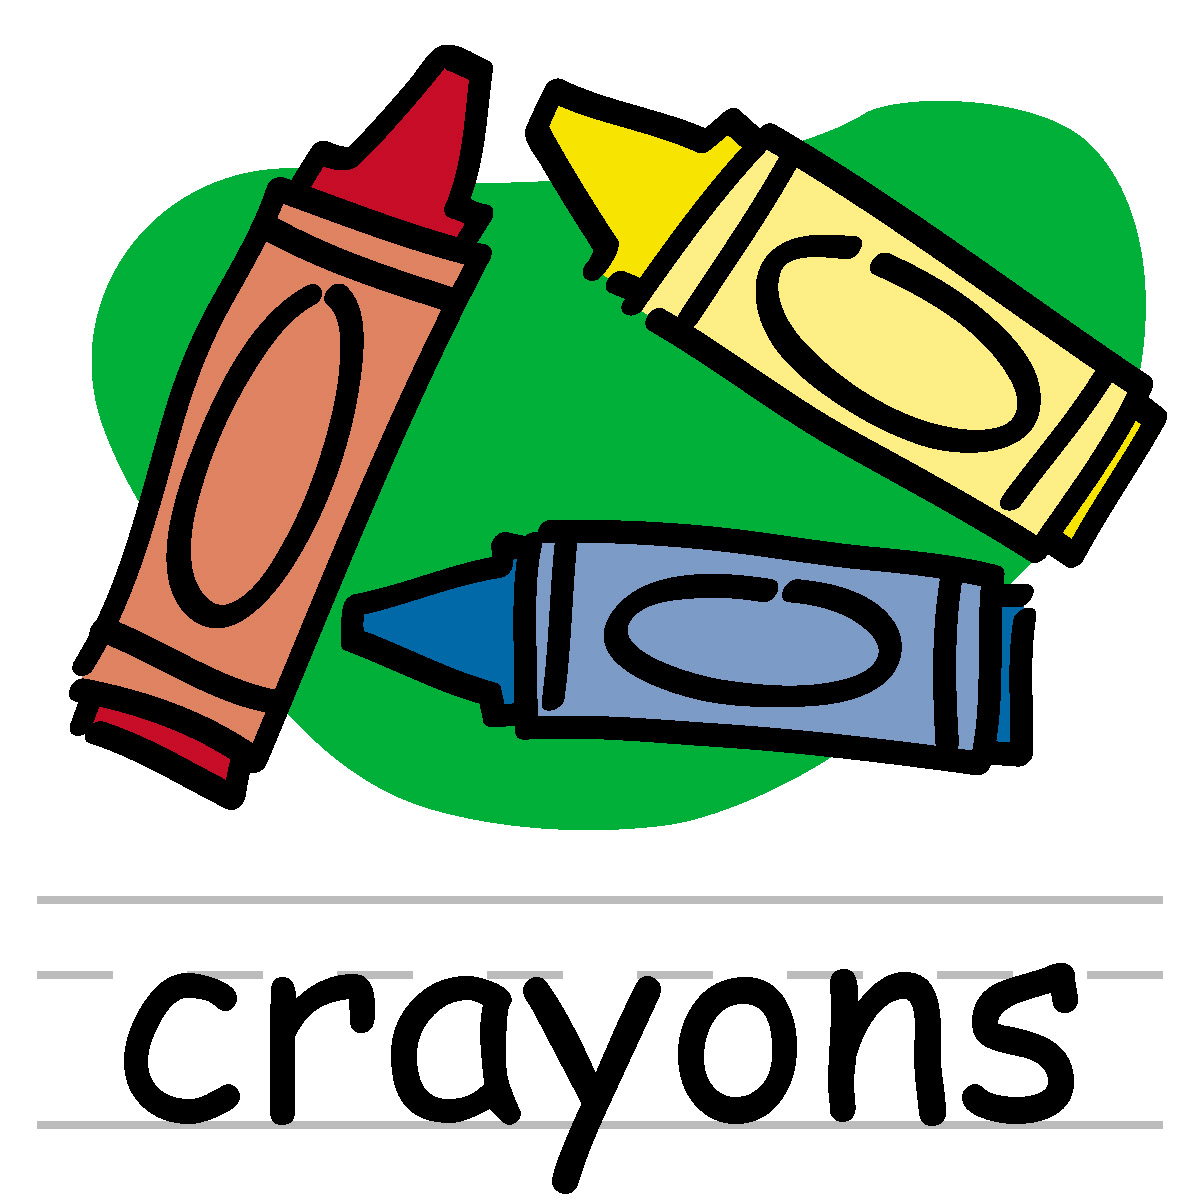 Crayola Crayon Box Clipart Crayon Clip Art Crayon Clip Art 7 Jpg